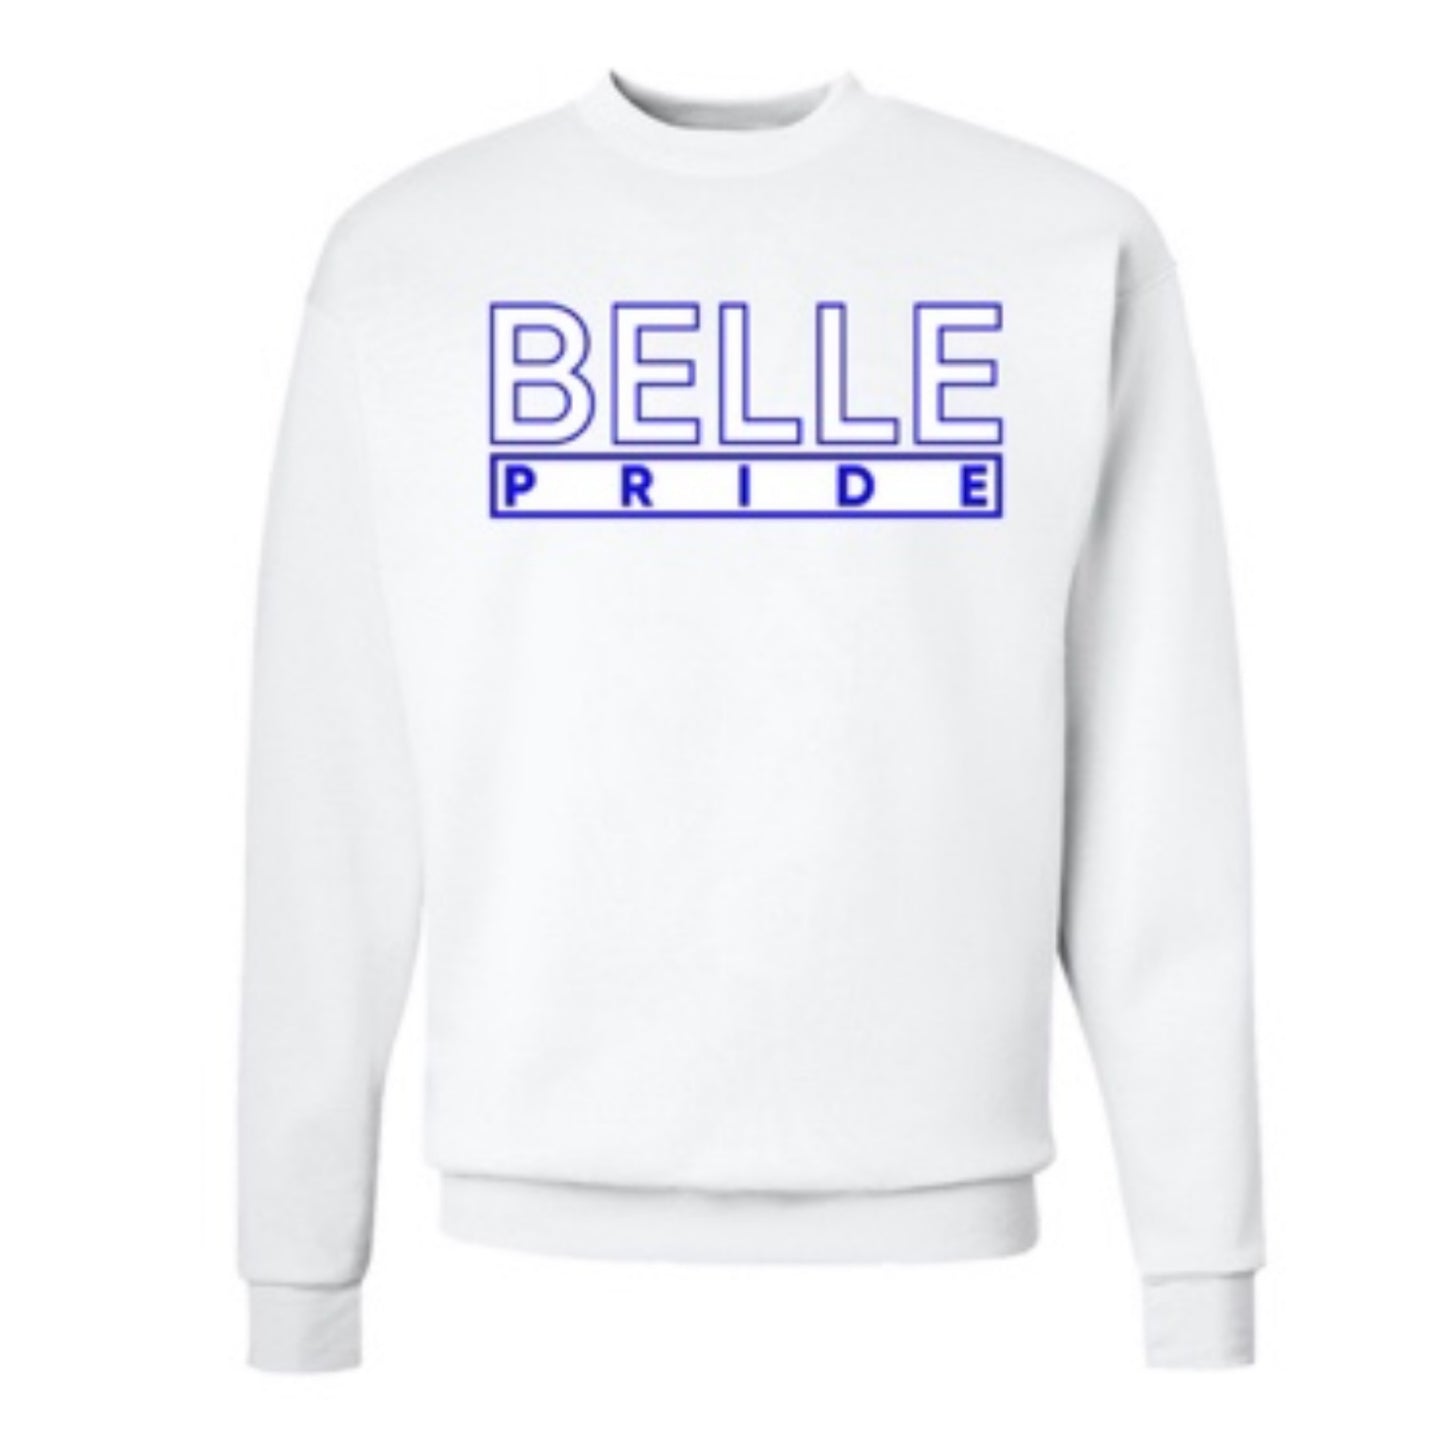 "Belle Pride" Hoodie/Crew in Royal Blue and White (NC)